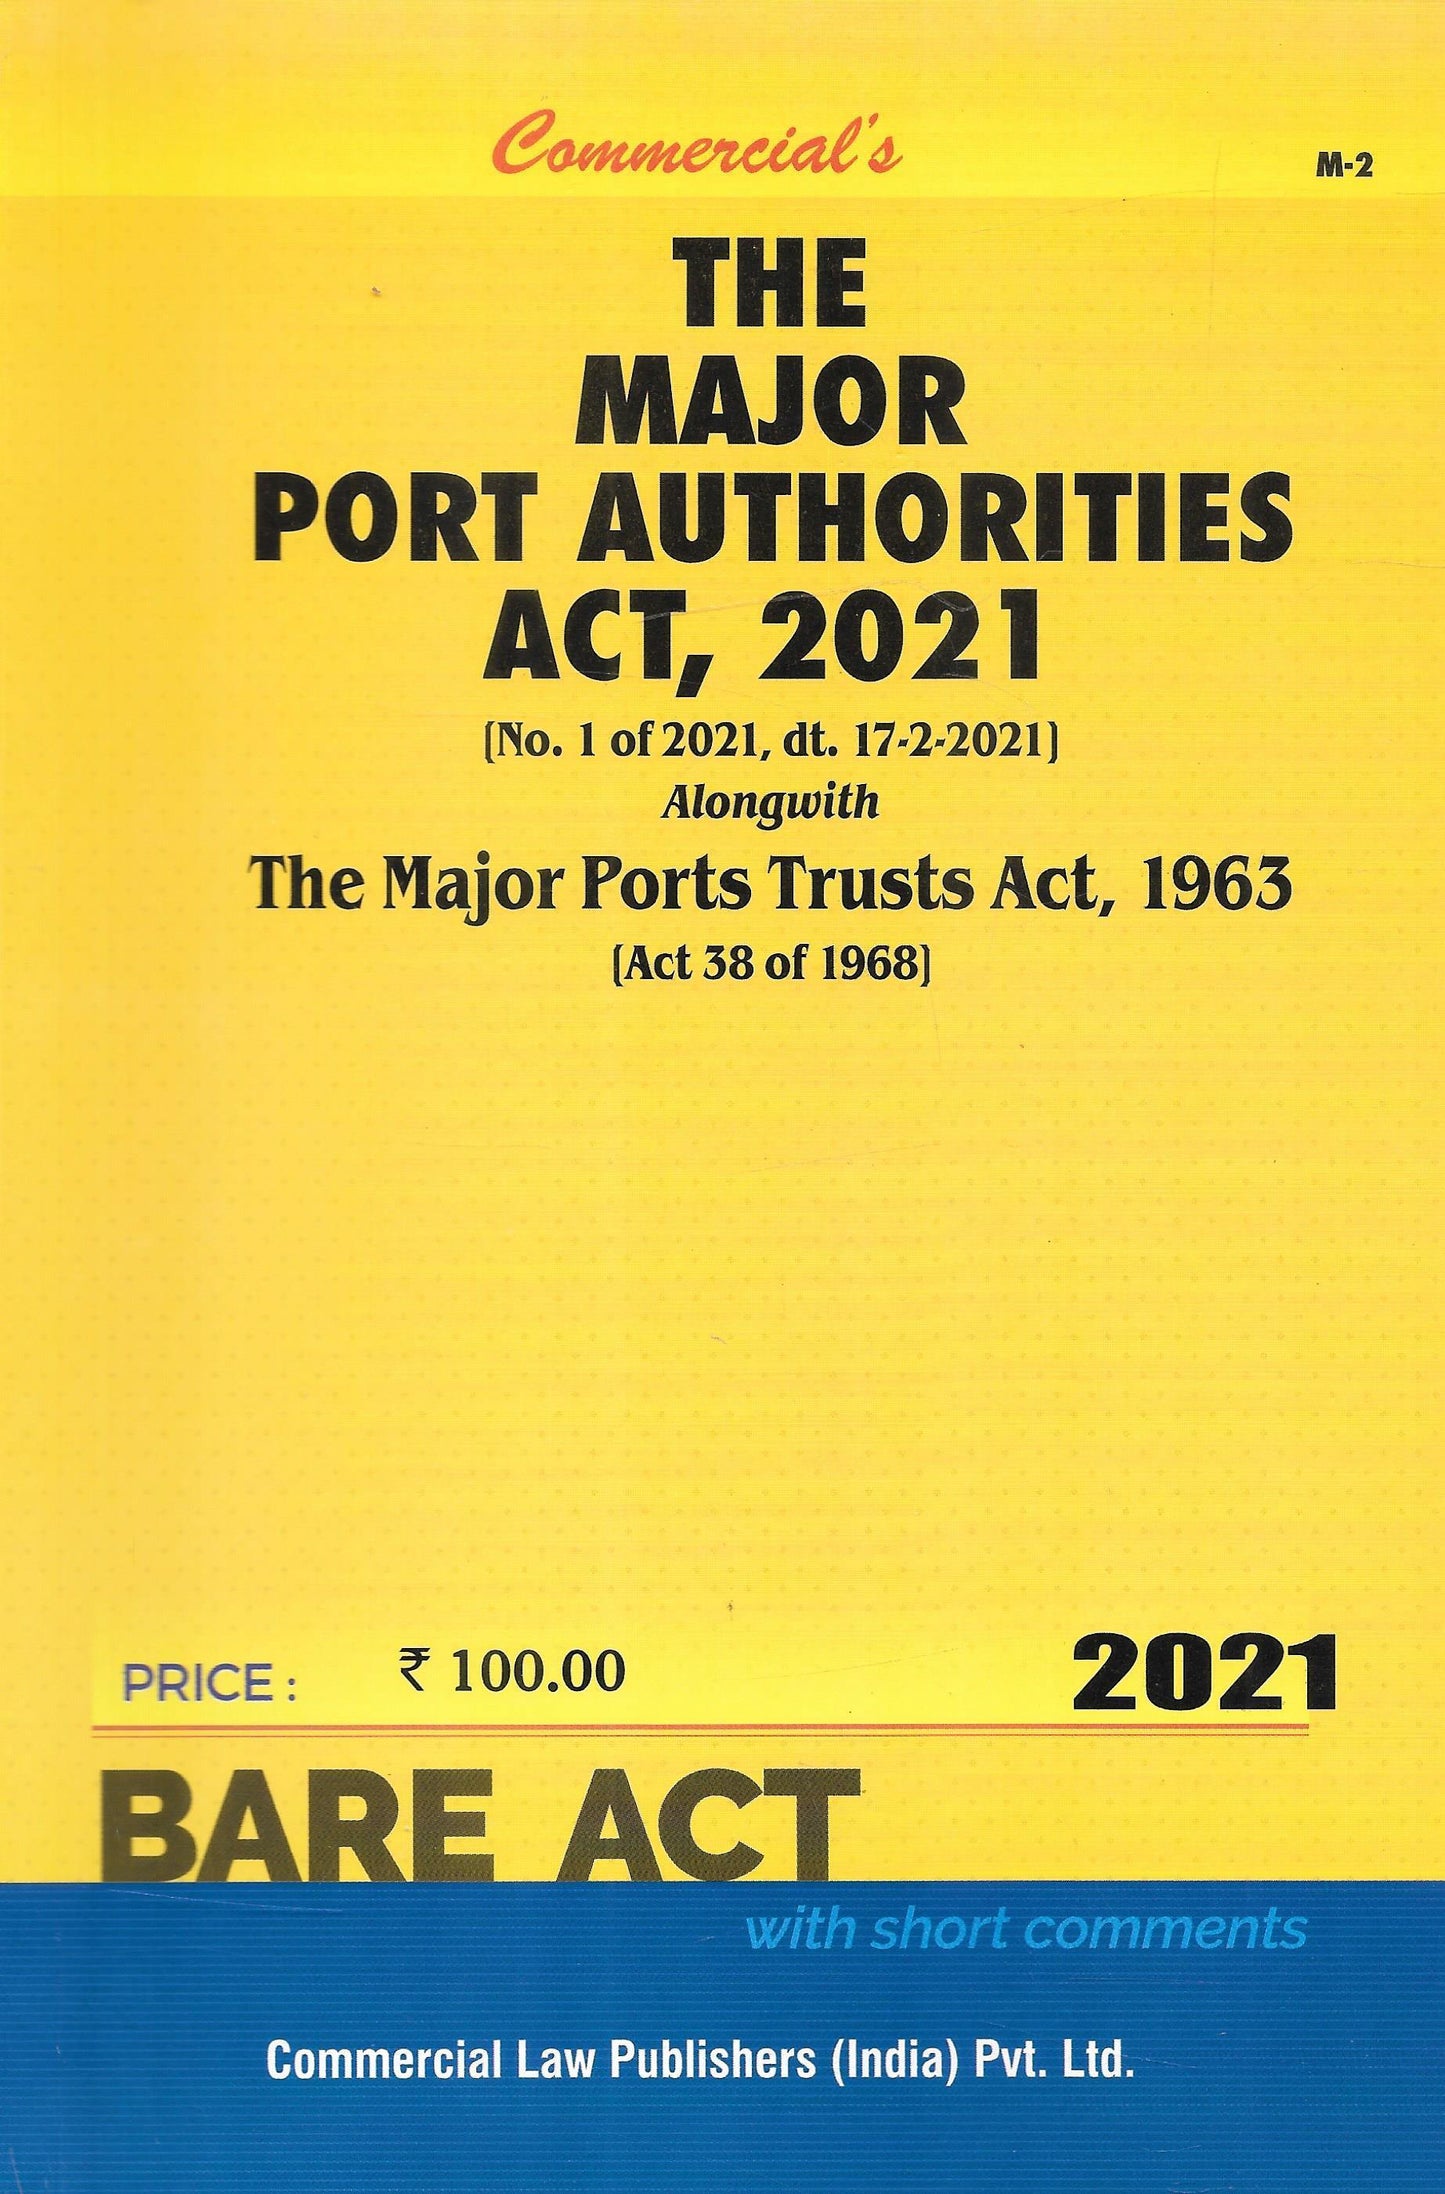 The Major Port Authorities Act, 2021